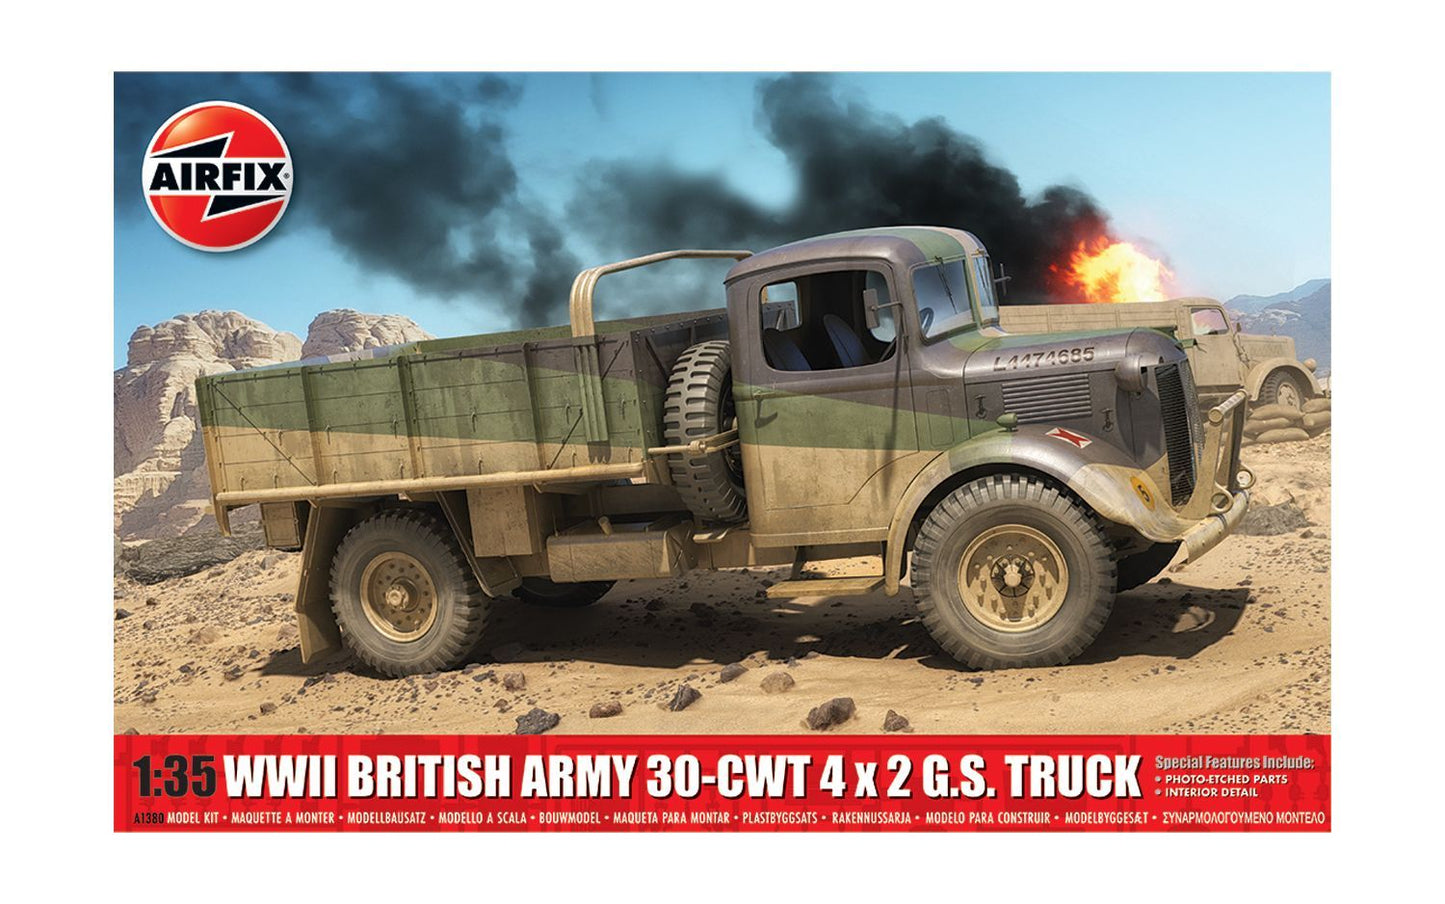 Airfix A1380 WWII British Army 30-cwt 4x2 GS Truck 1/35